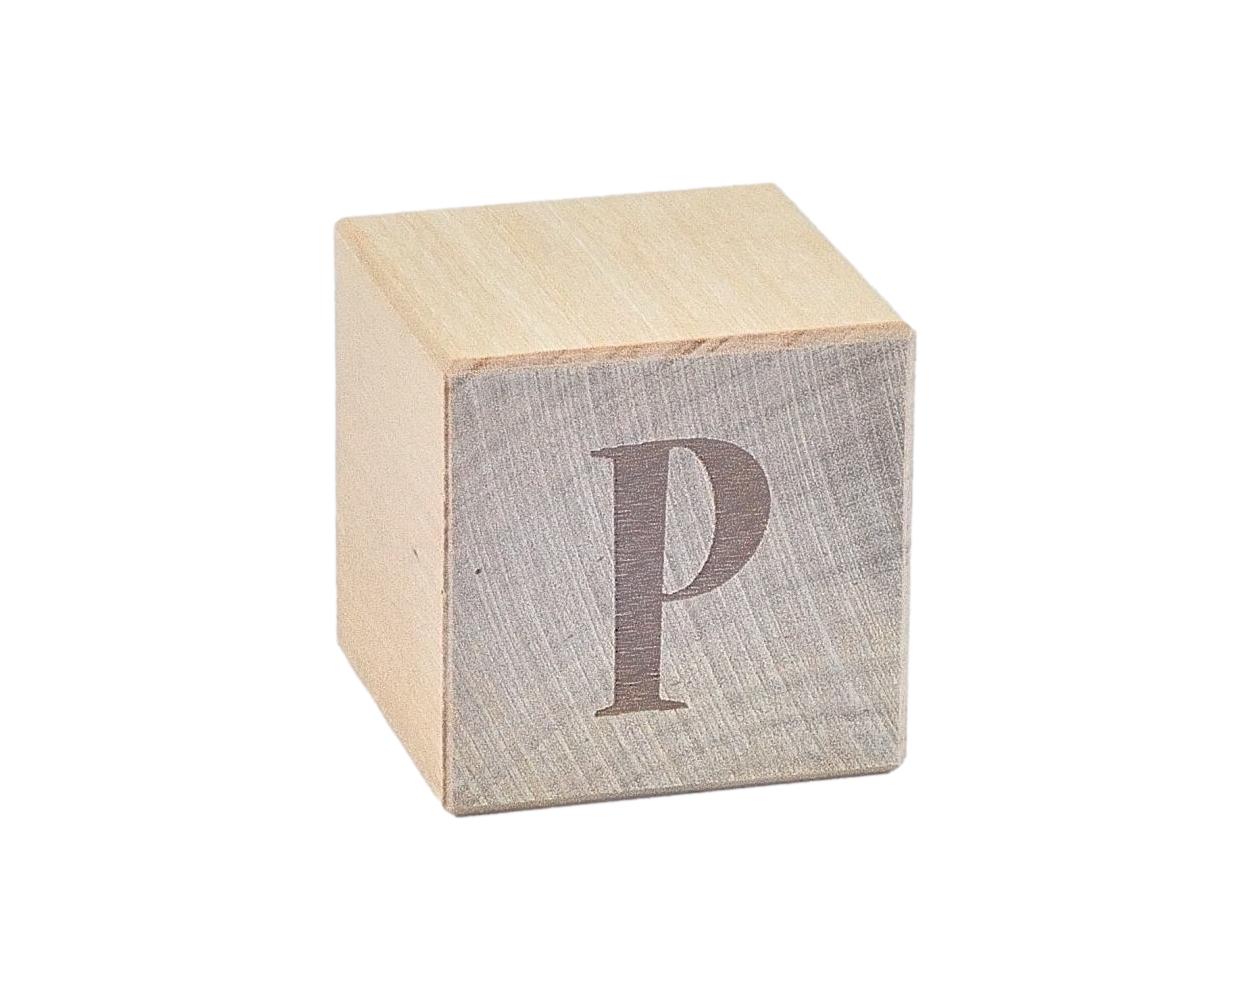 Engraved letter block